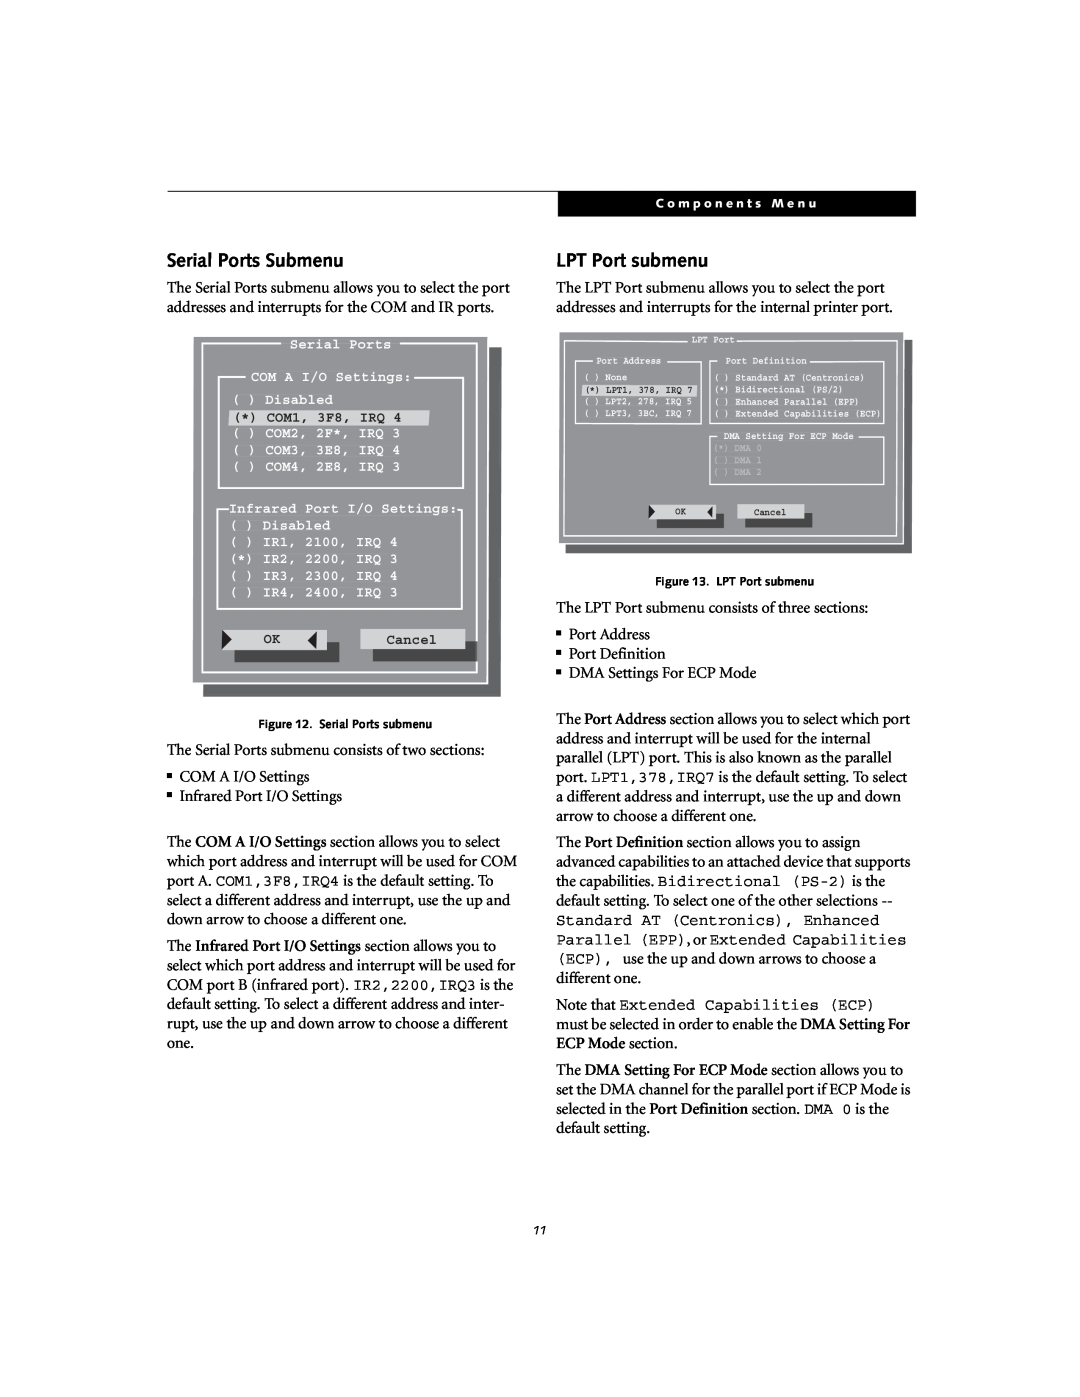 Fujitsu A1010 manual Serial Ports Submenu, LPT Port submenu 